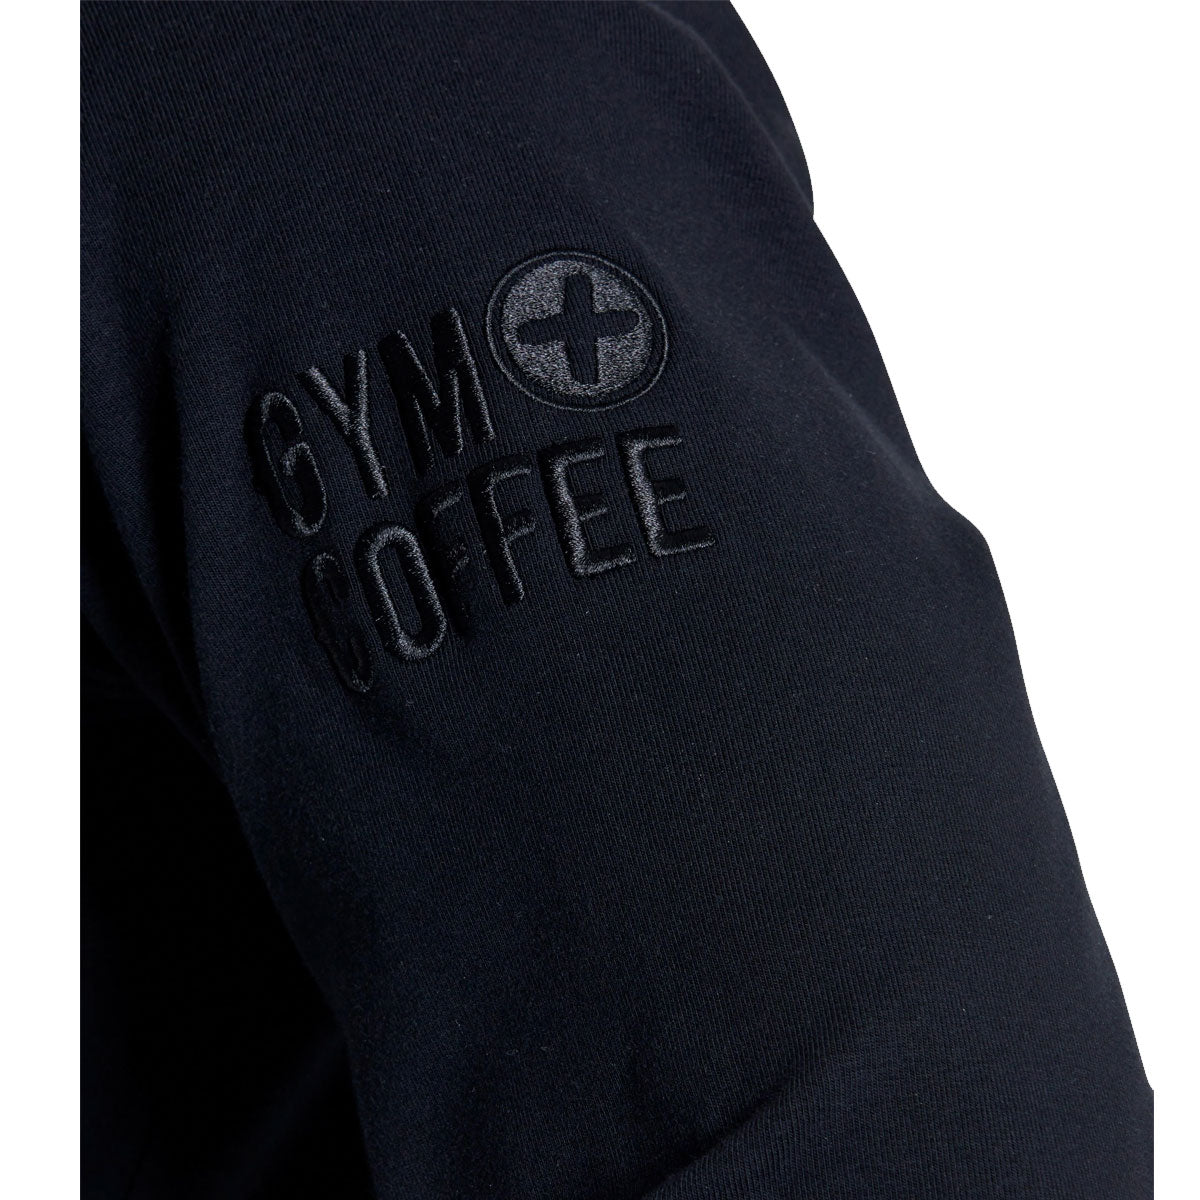 Gym+Coffee Chill Half Zip Hoodie - Mens - Black